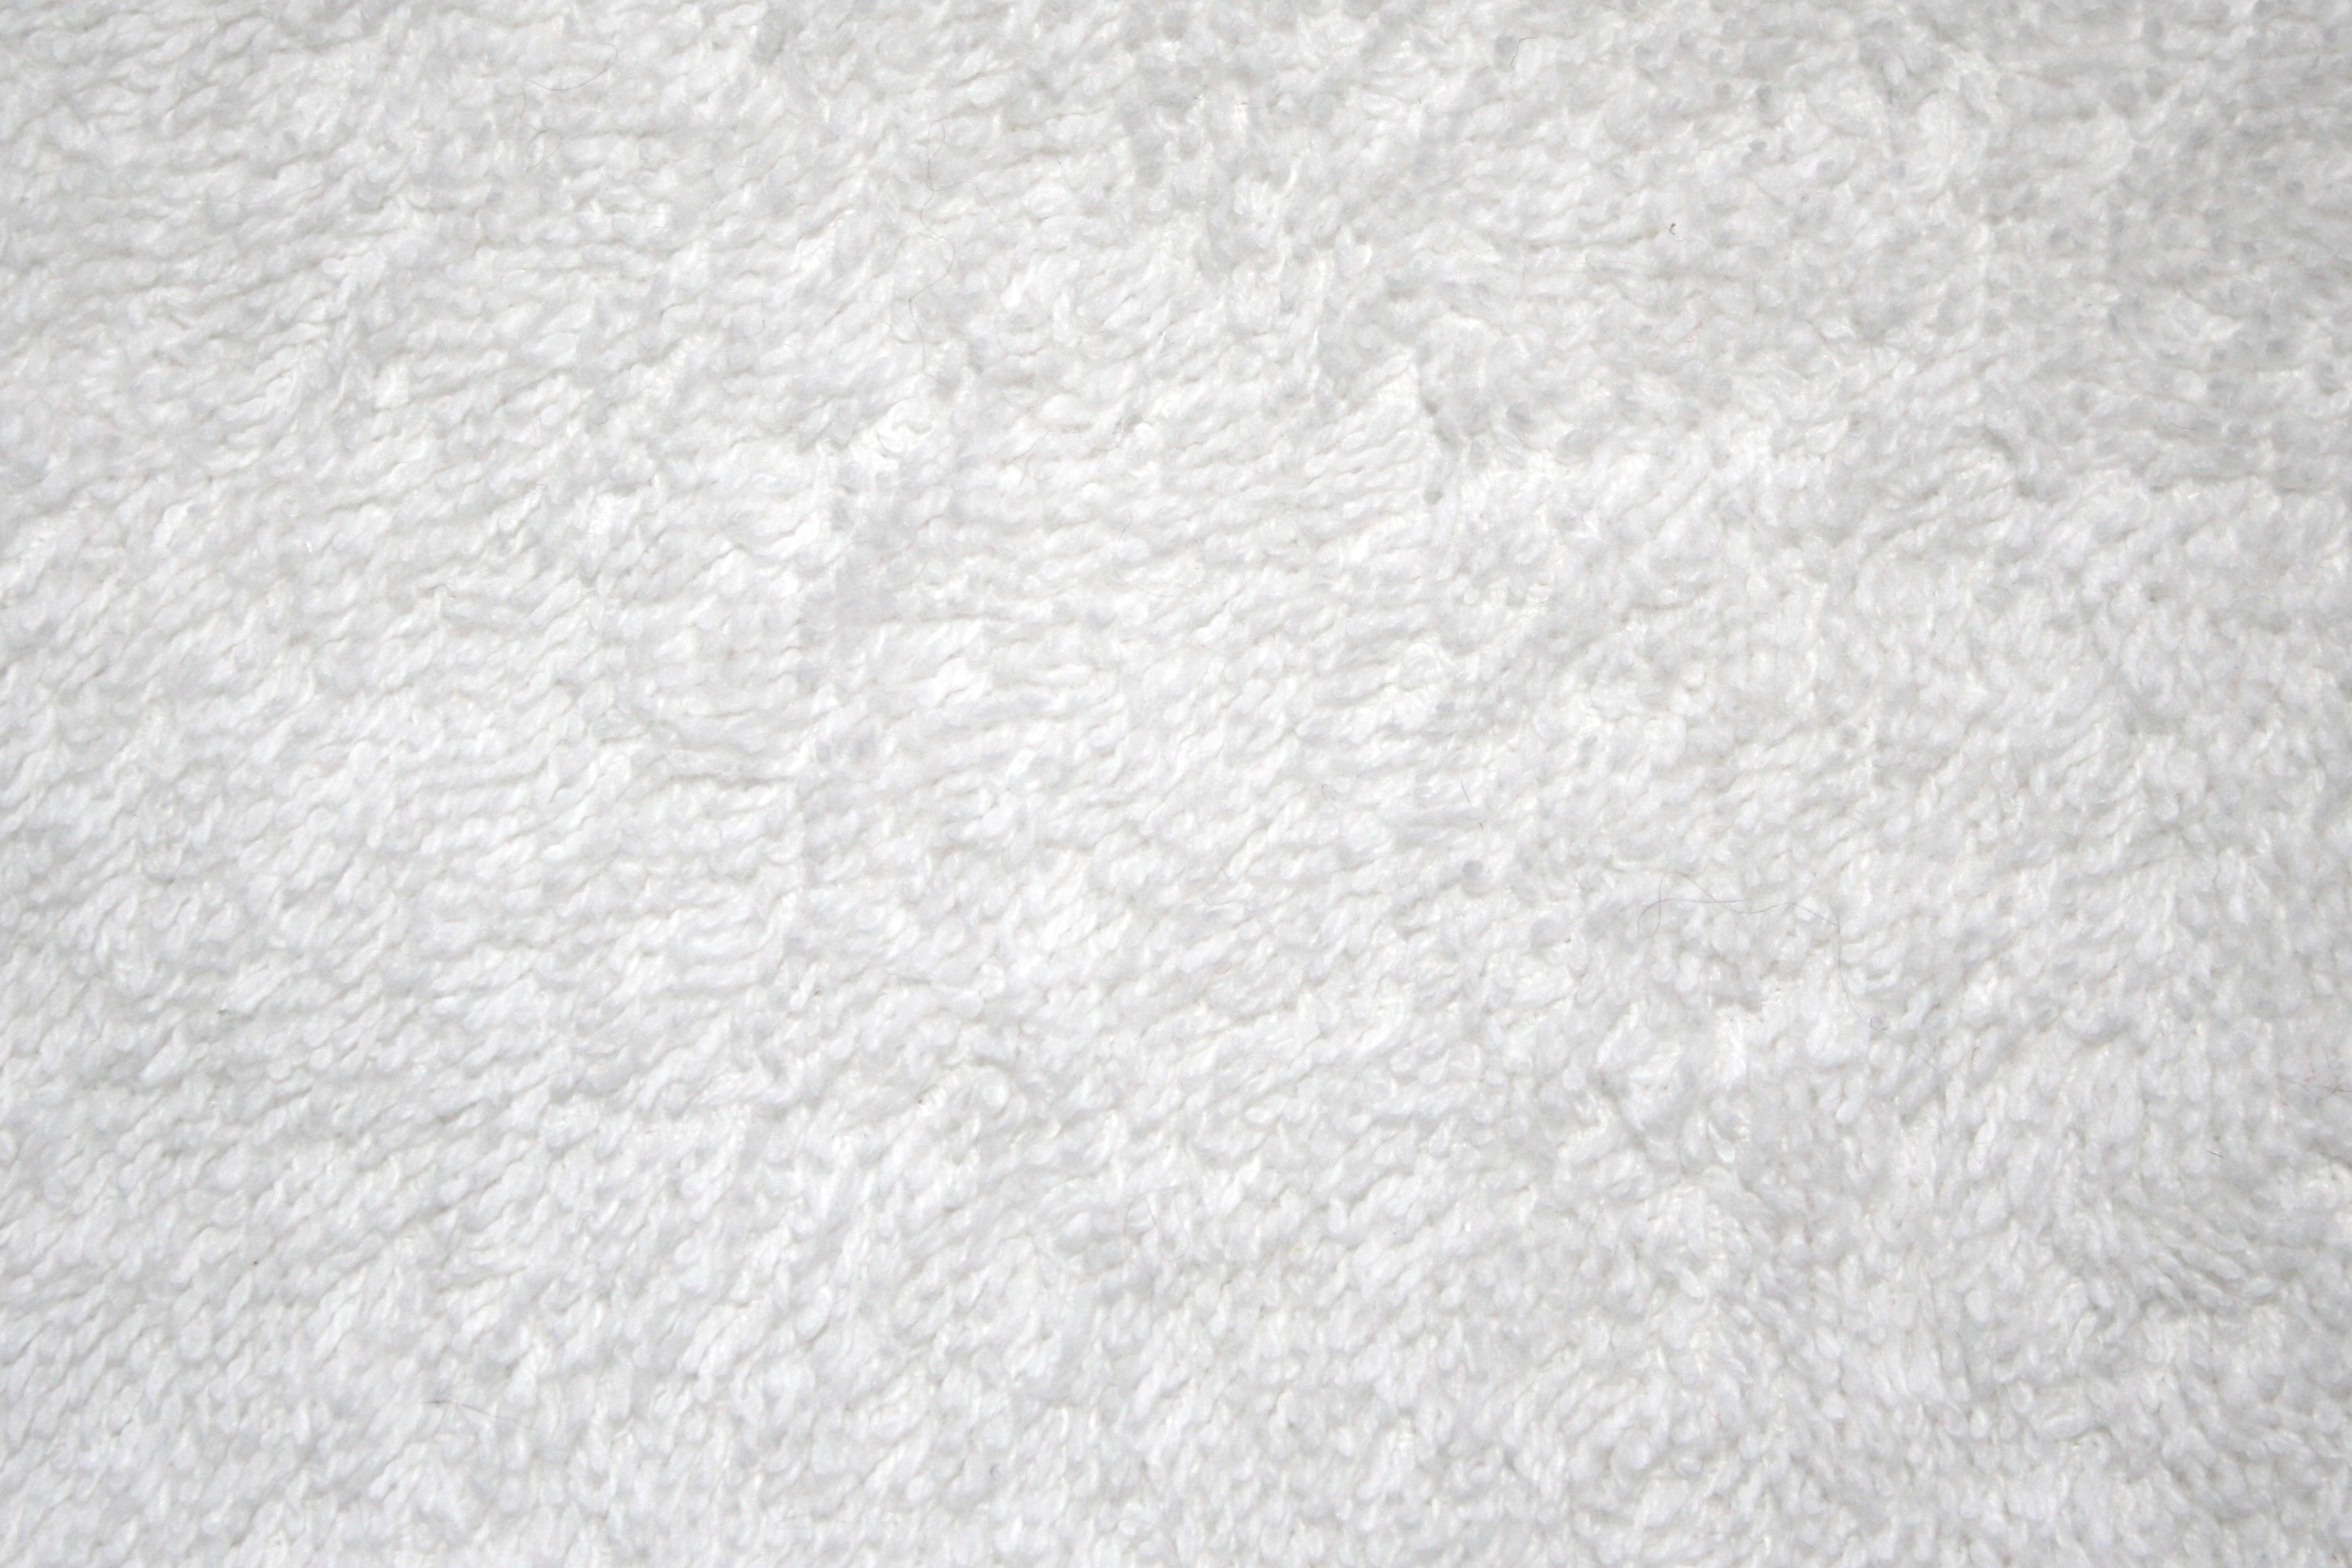 White Terry Cloth Closeup Texture Picture Photograph Photos